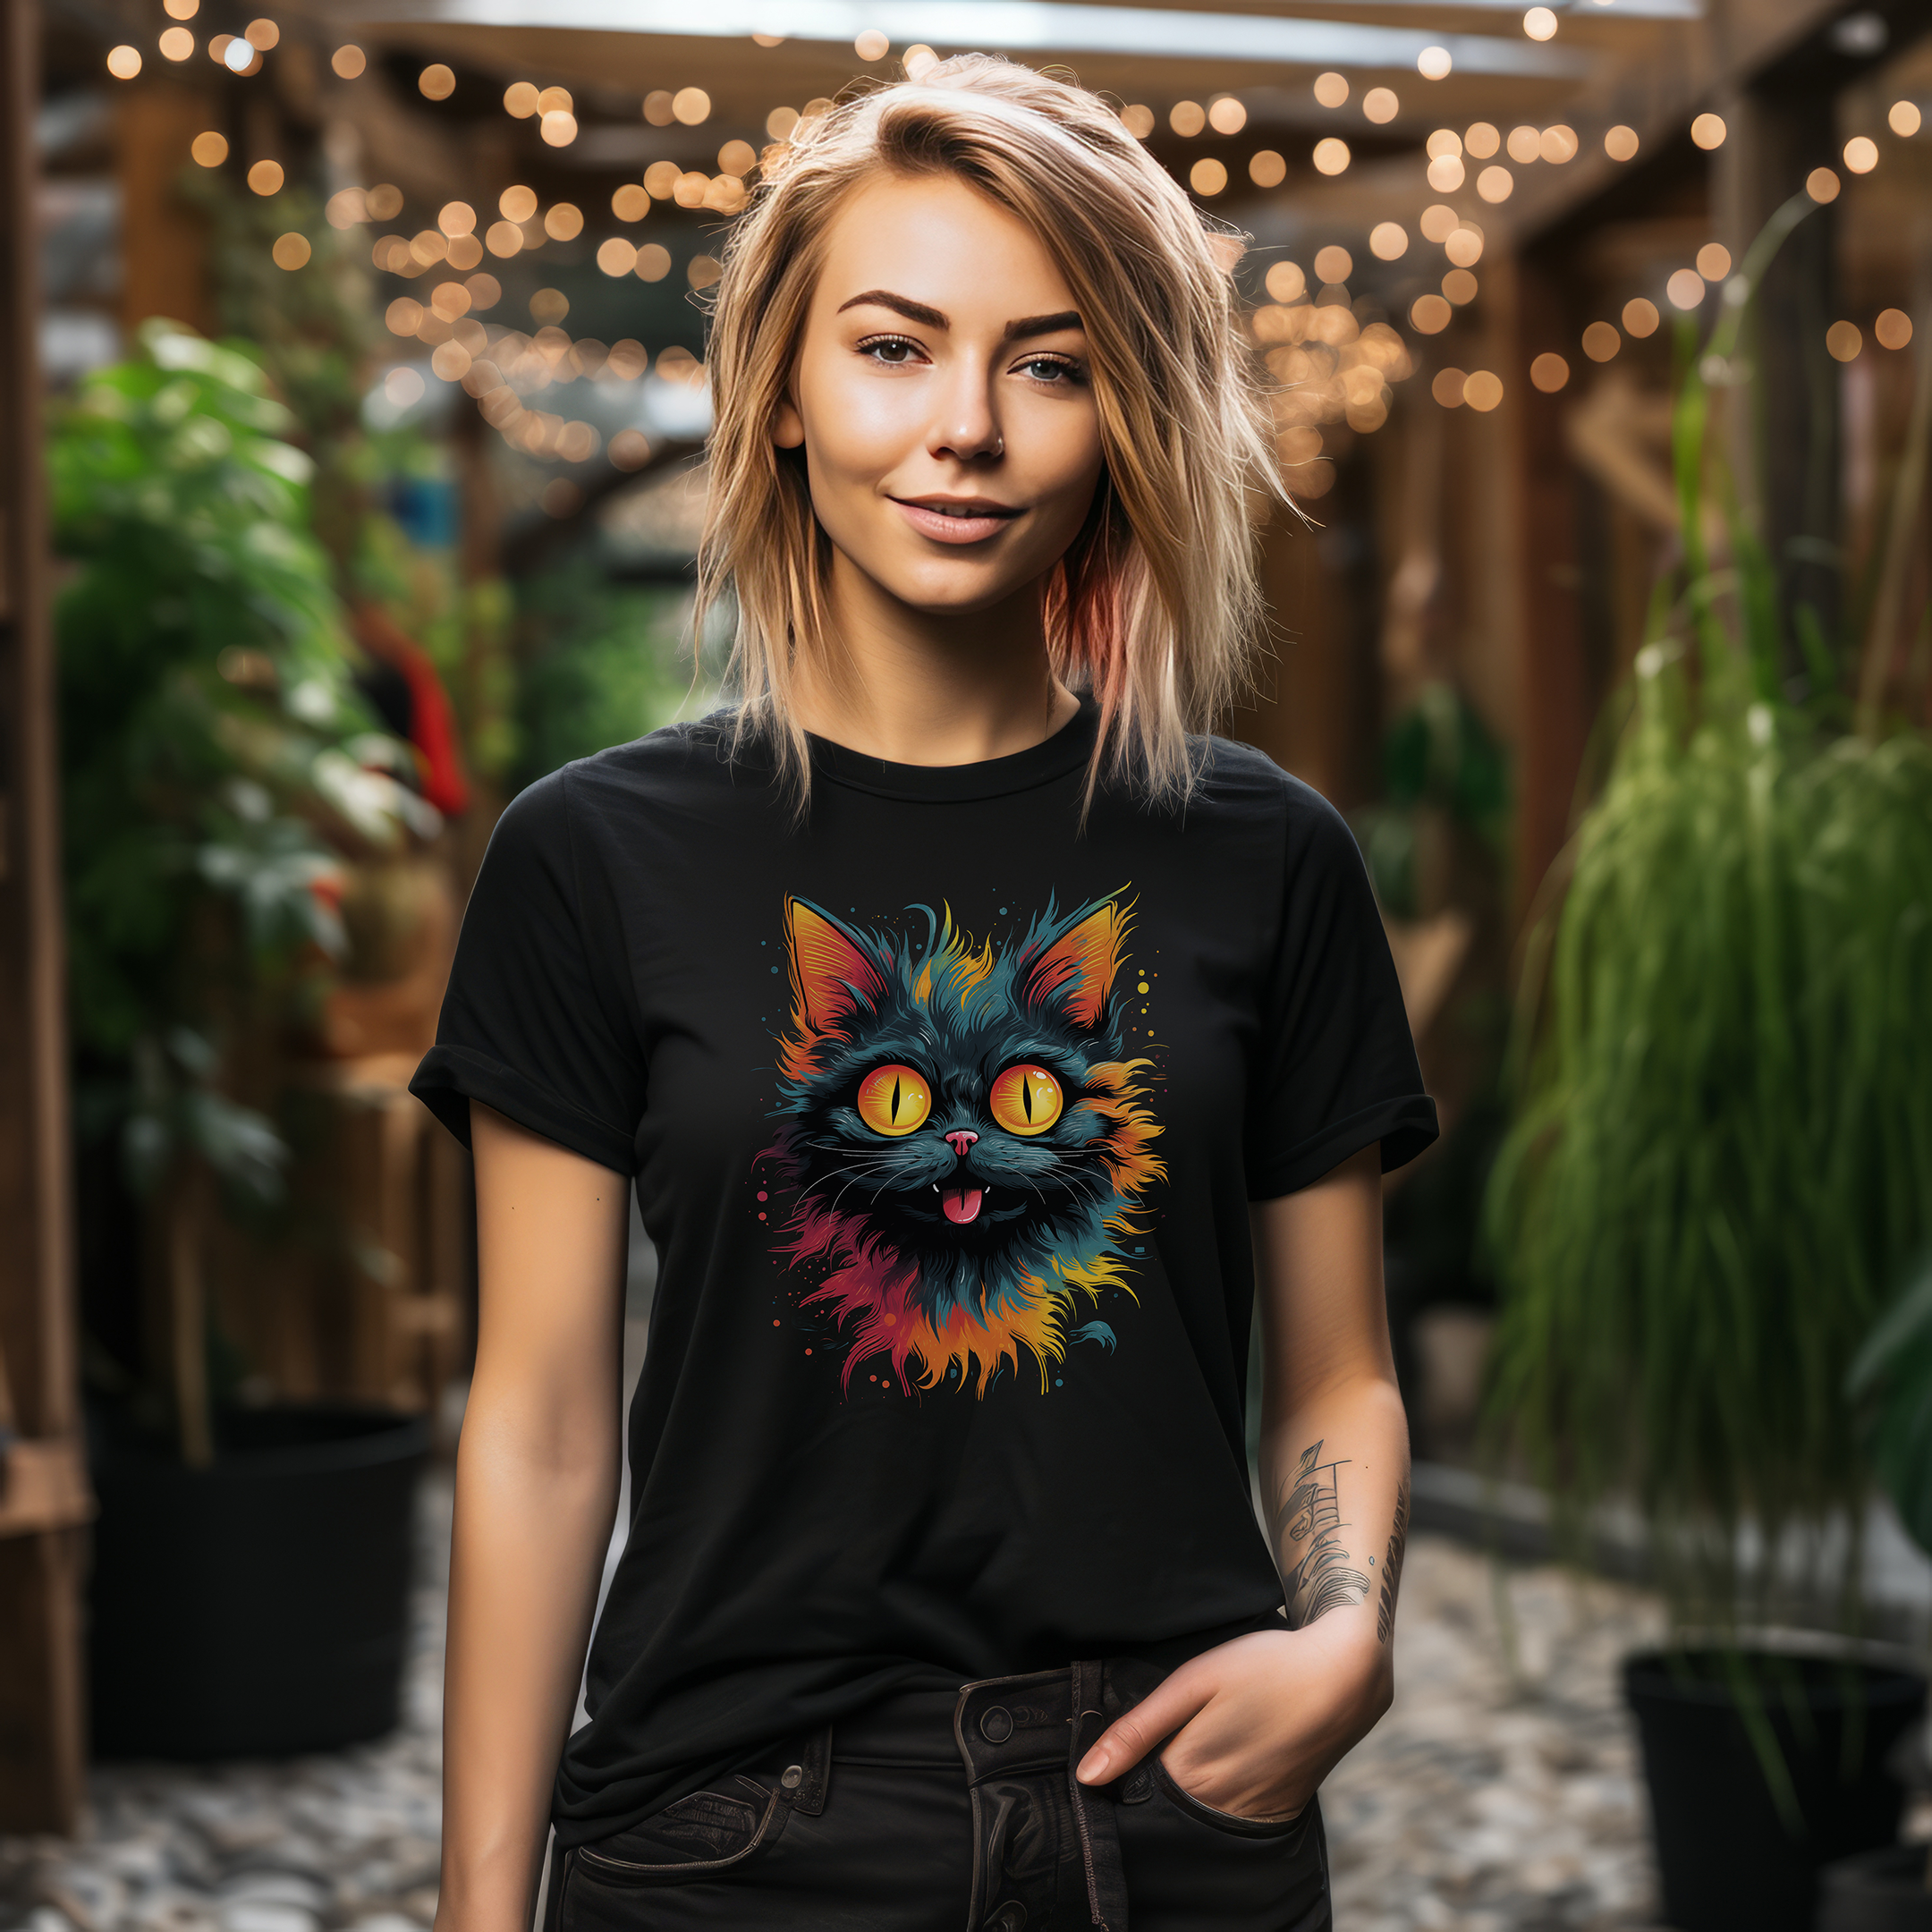 Colorful Cat Art Tee – Vibrant Comfort Fit Cotton Shirt